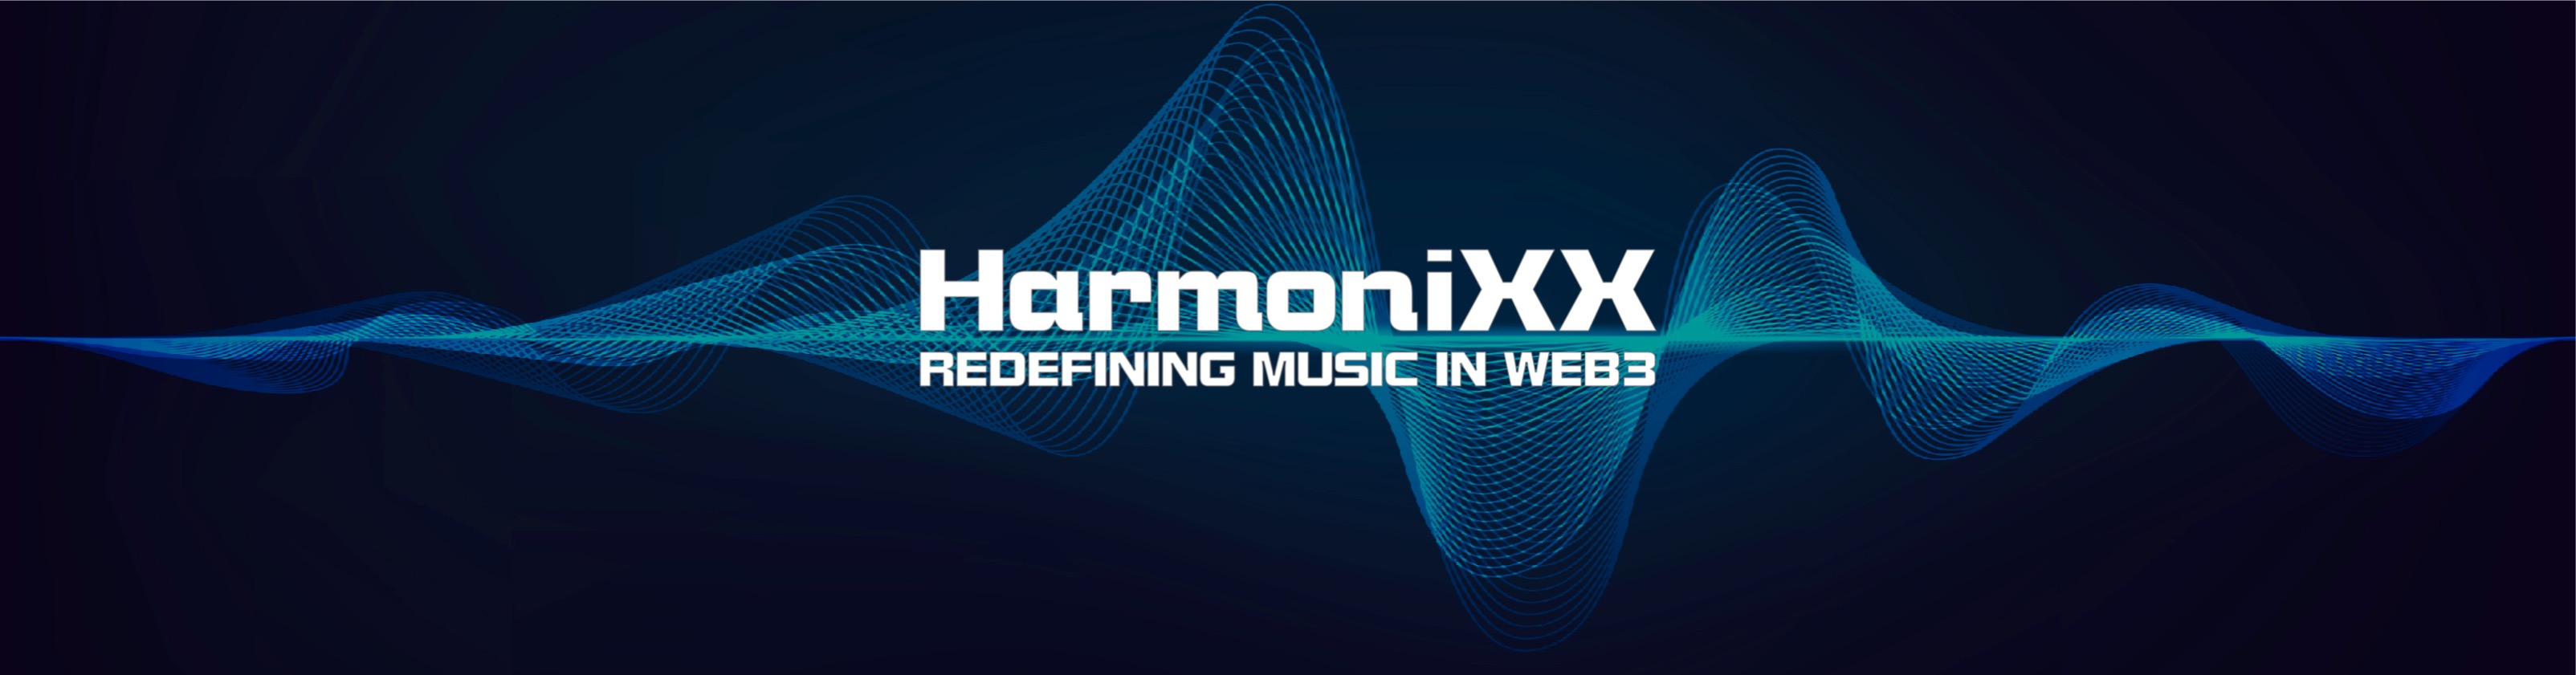 HarmoniXX banner